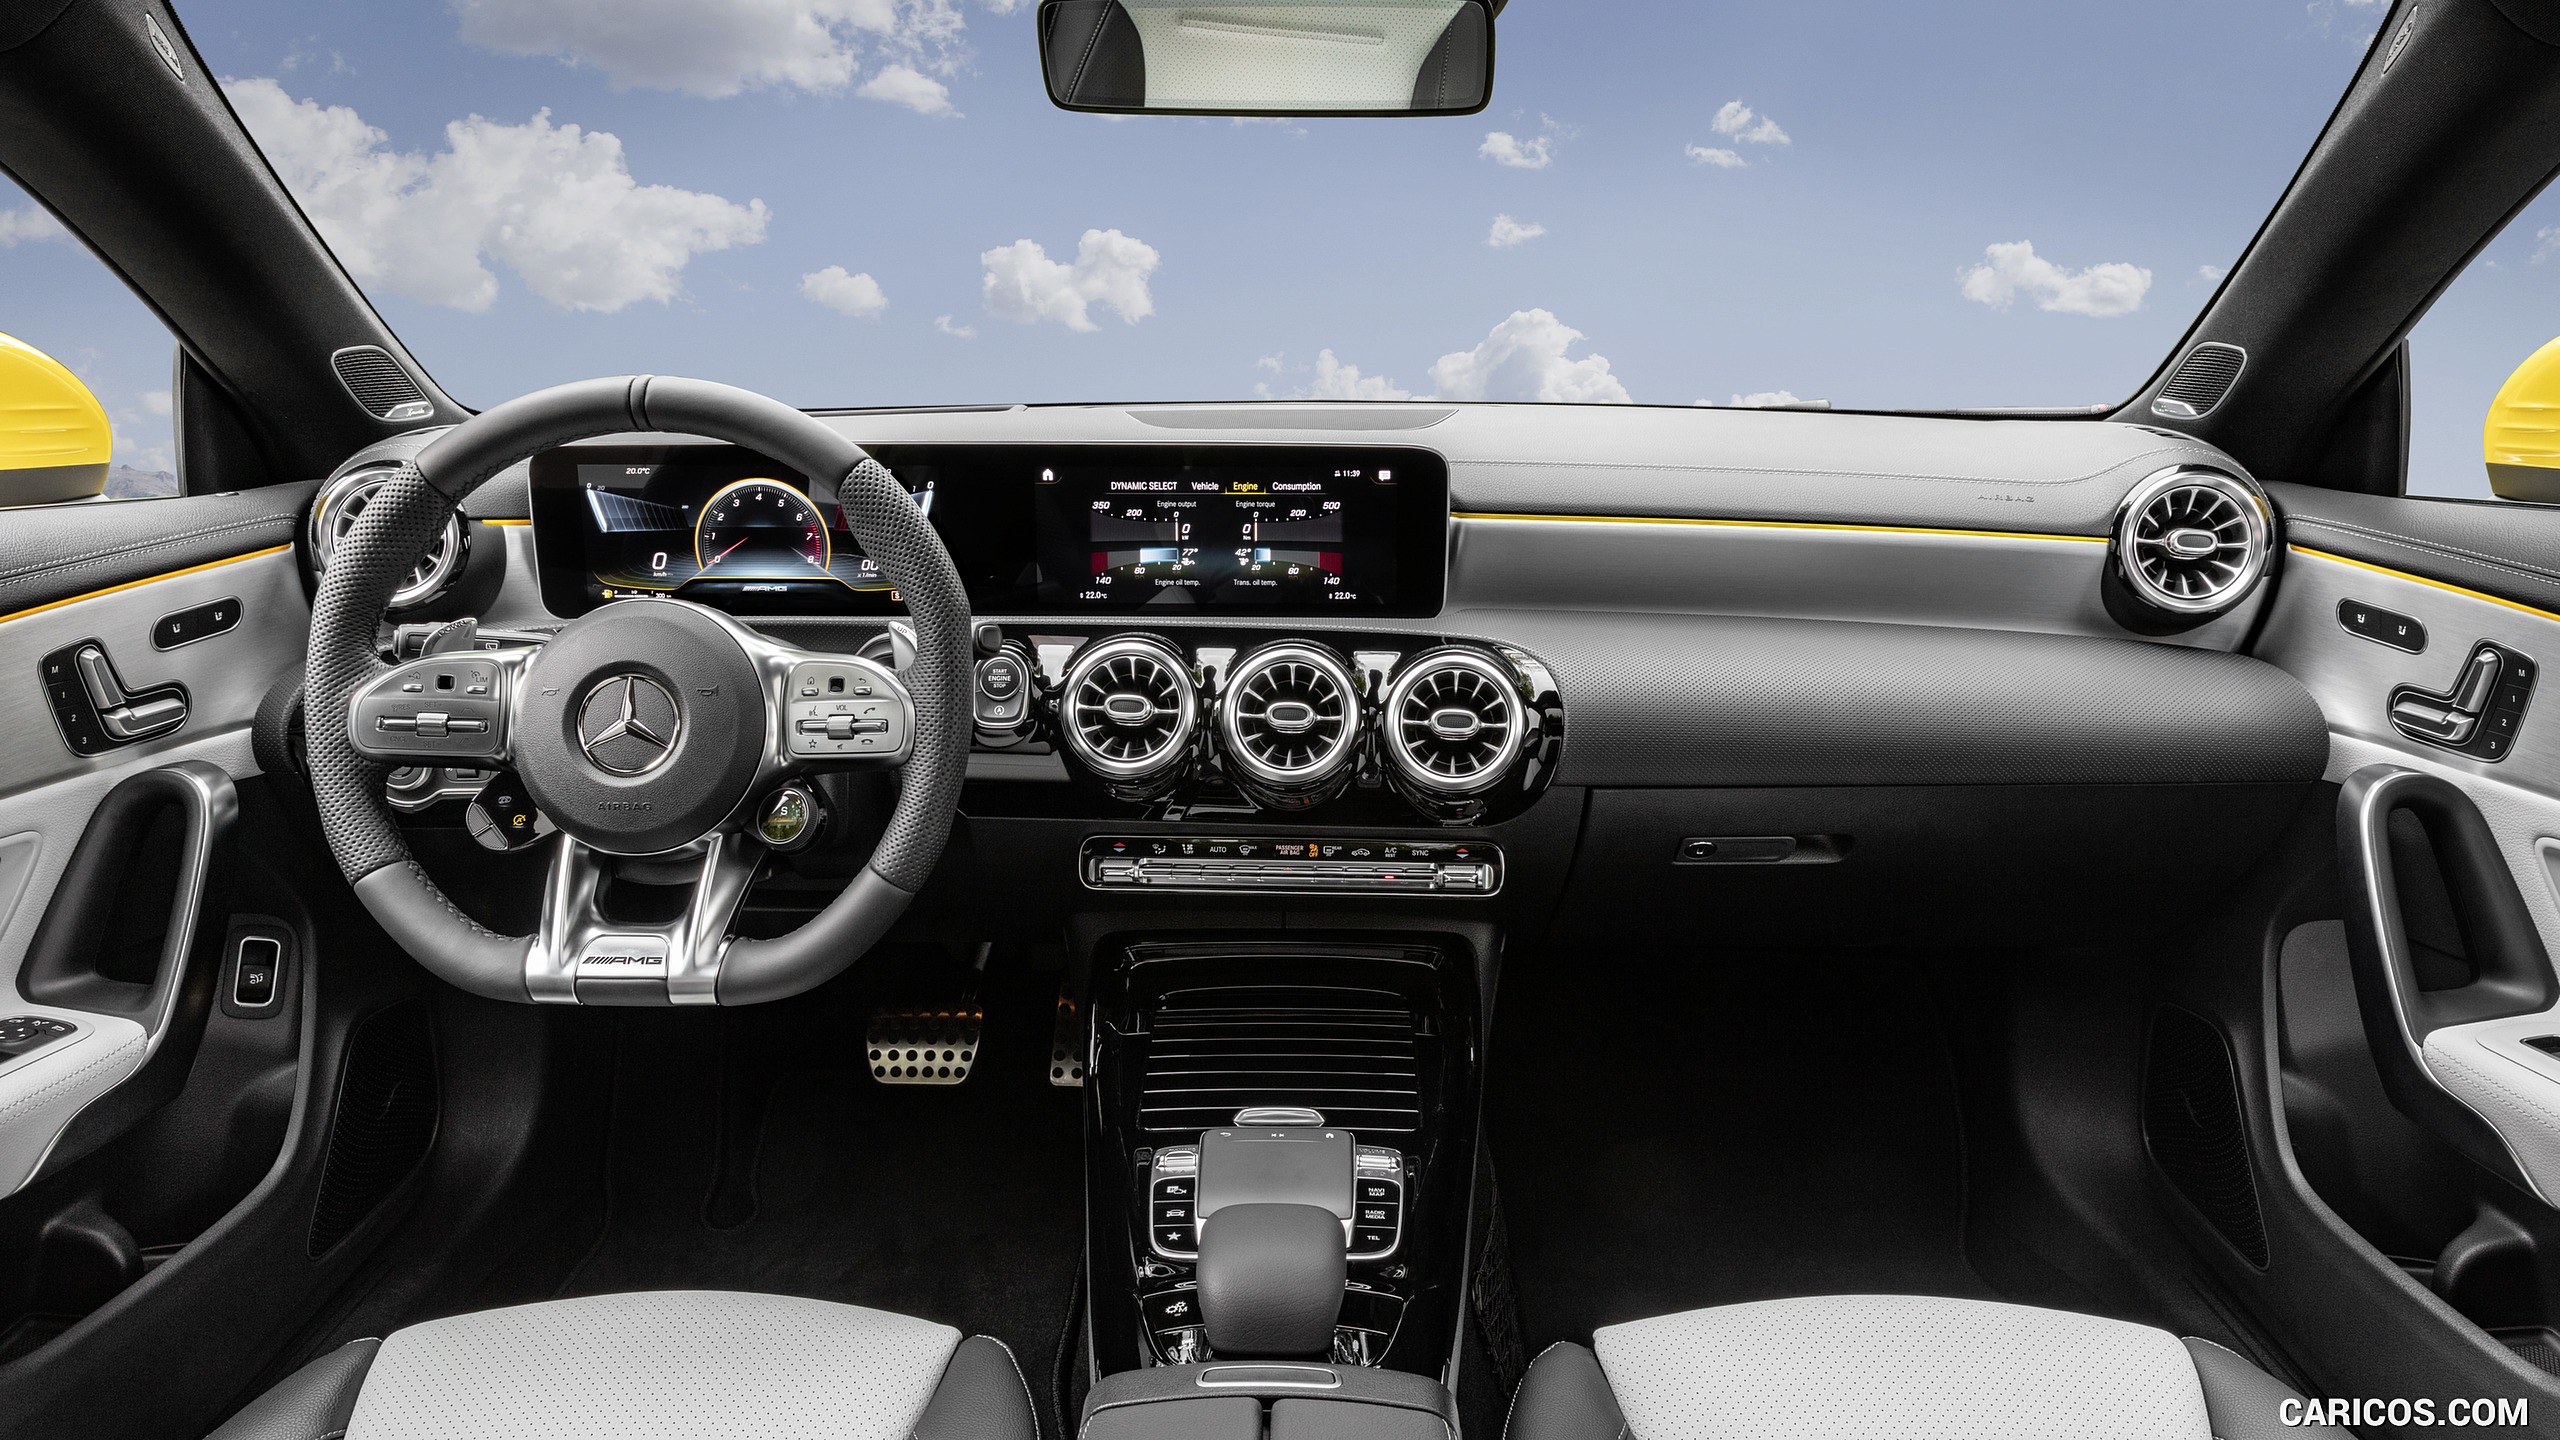 2020 Mercedes-AMG CLA 35 4MATIC Shooting Brake - Interior, Cockpit, #20 of 21